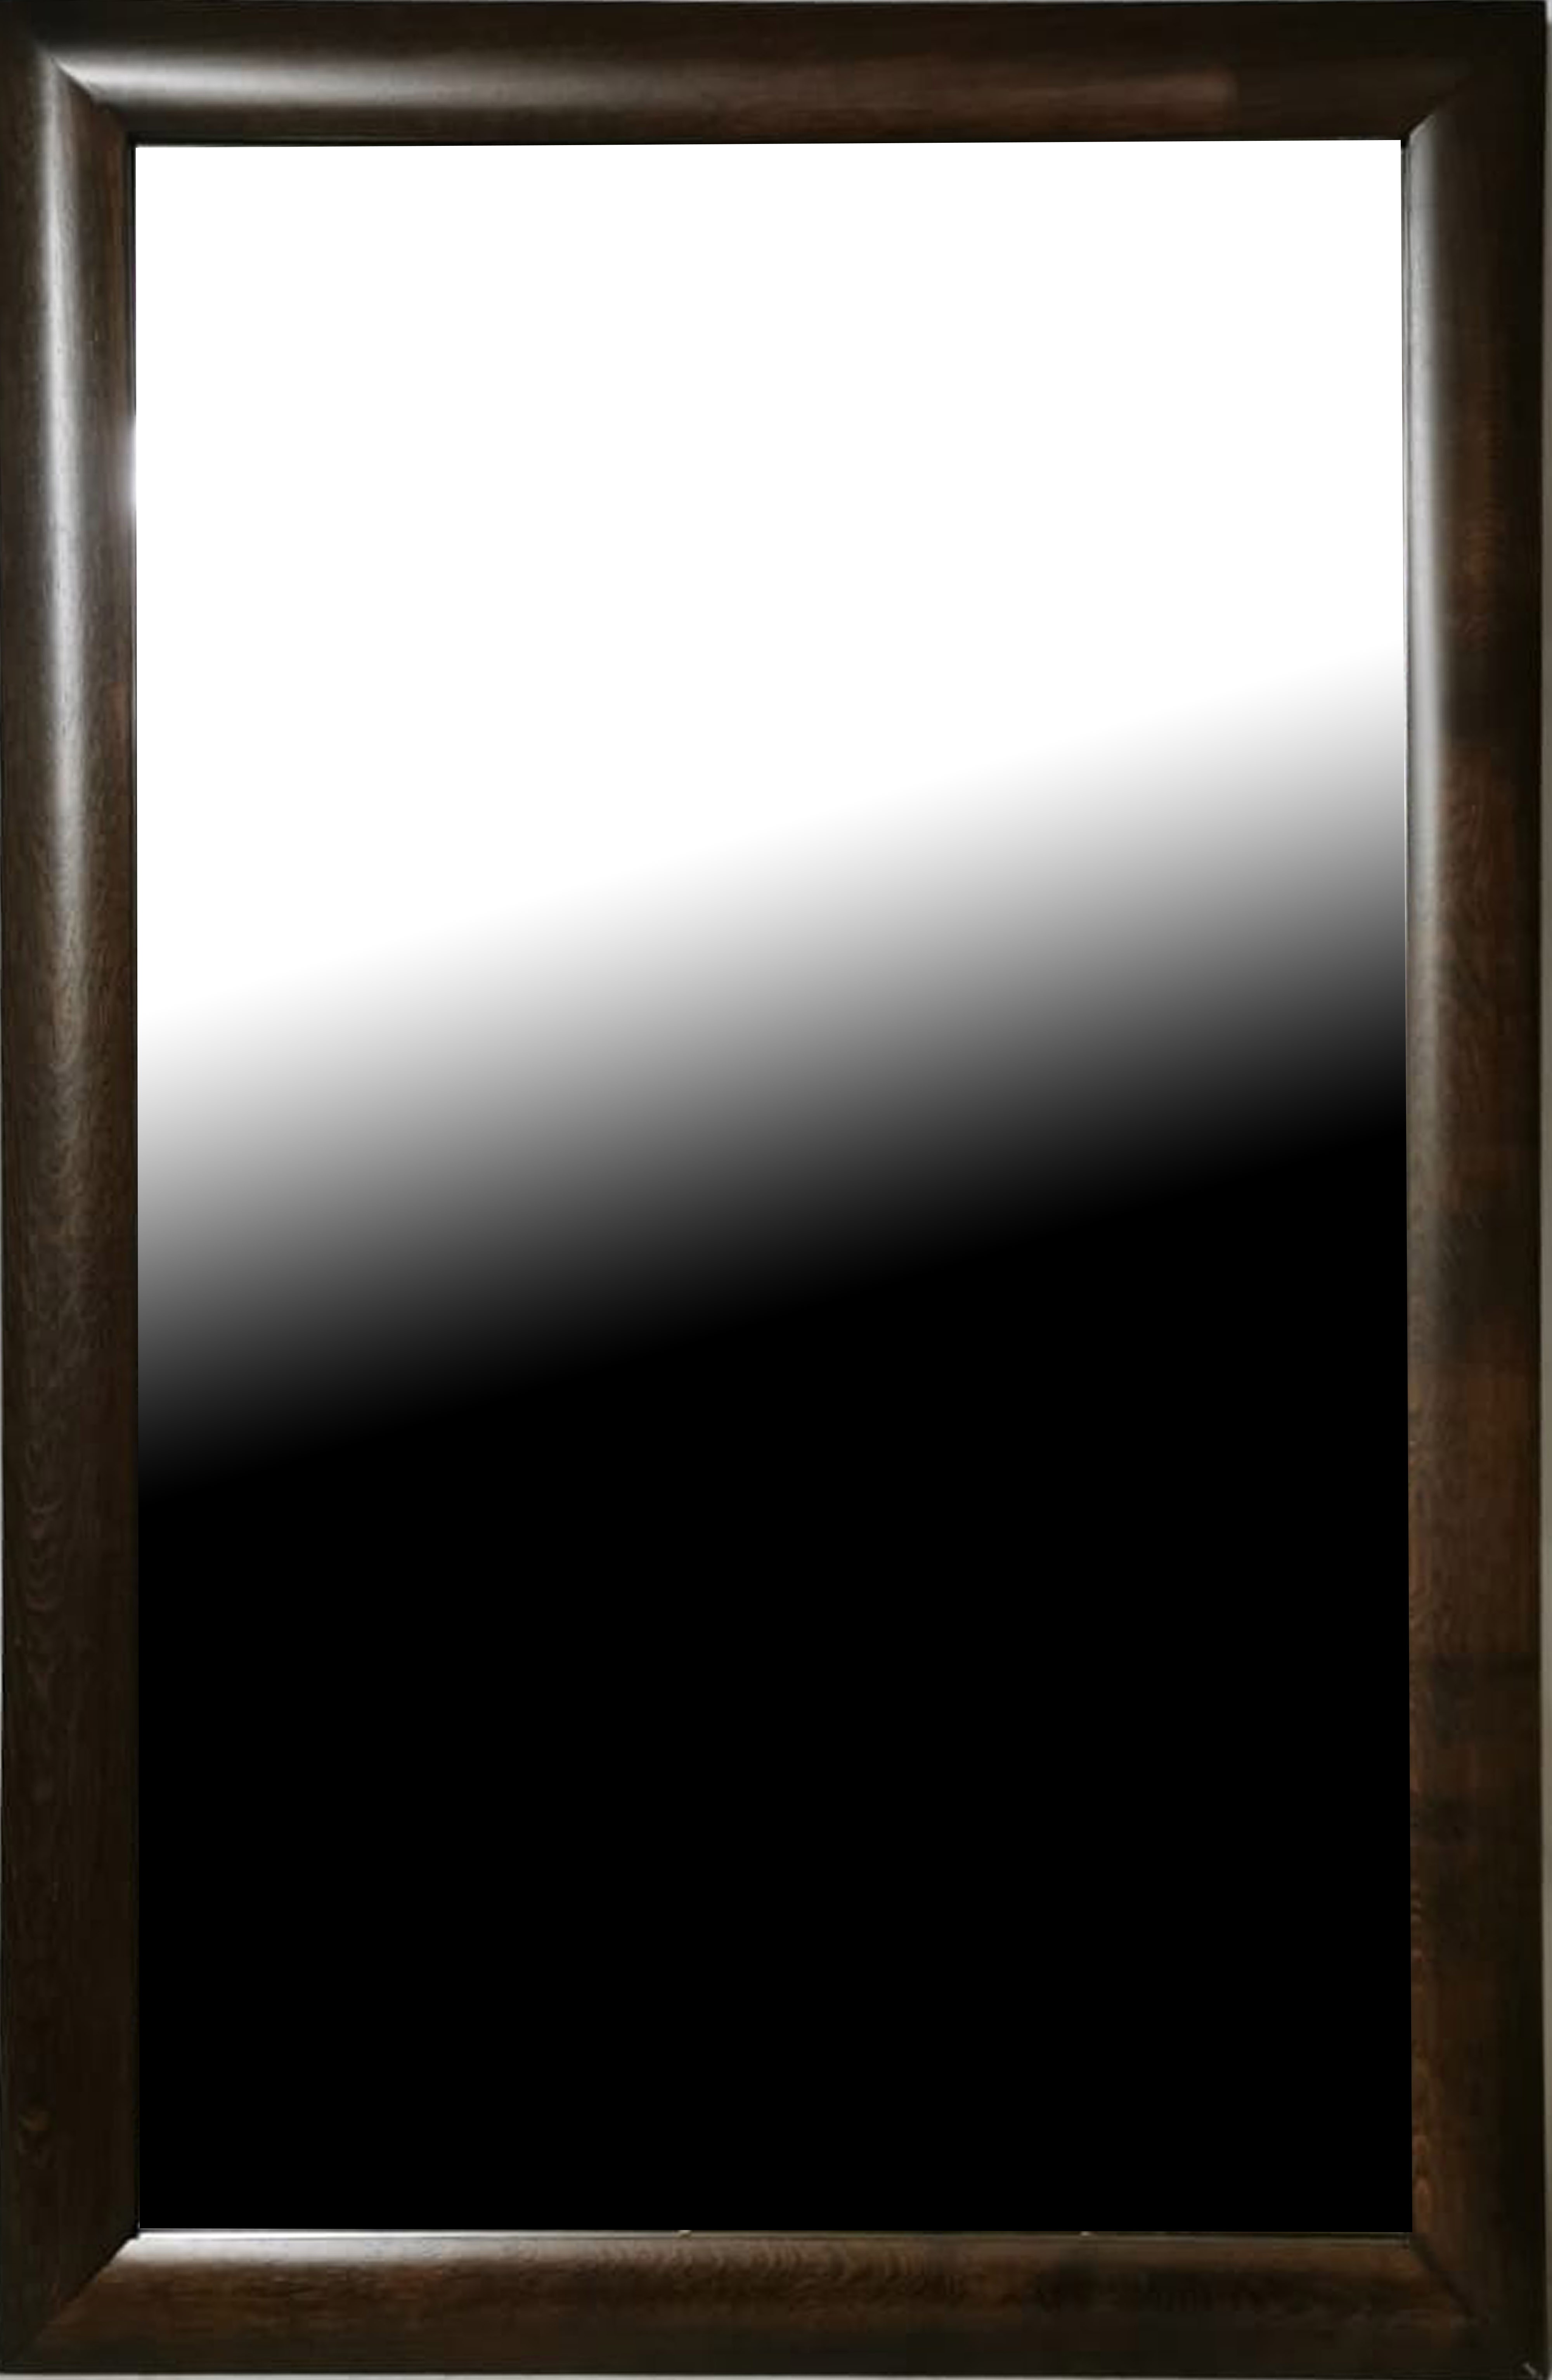 A LARGE DEEP CUSHION OAK FRAMED MIRROR 113 x 76 cm